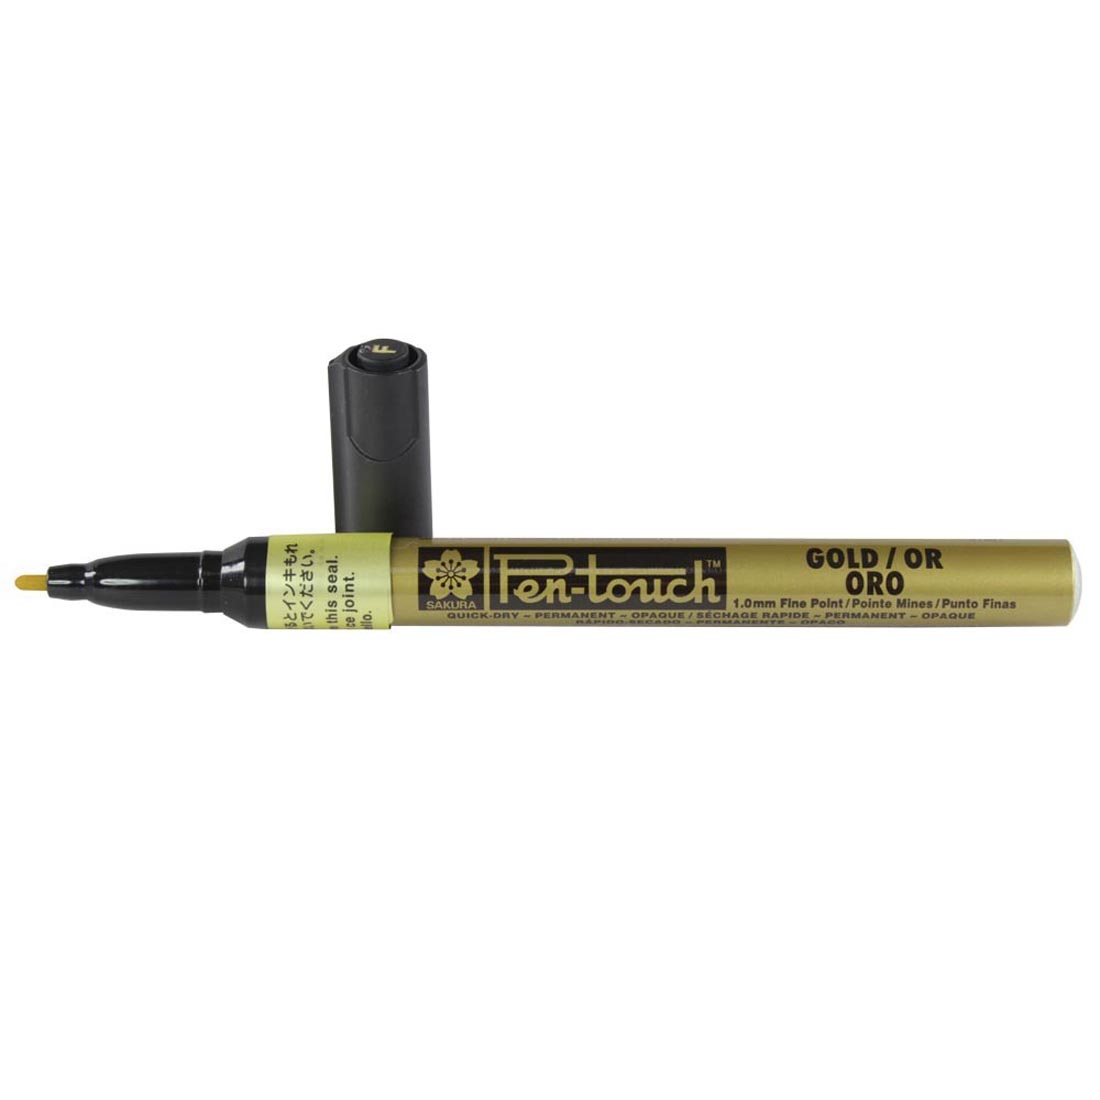 Sakura Pen-Touch Opaque Marker Fine Point Metallic Gold with cap off